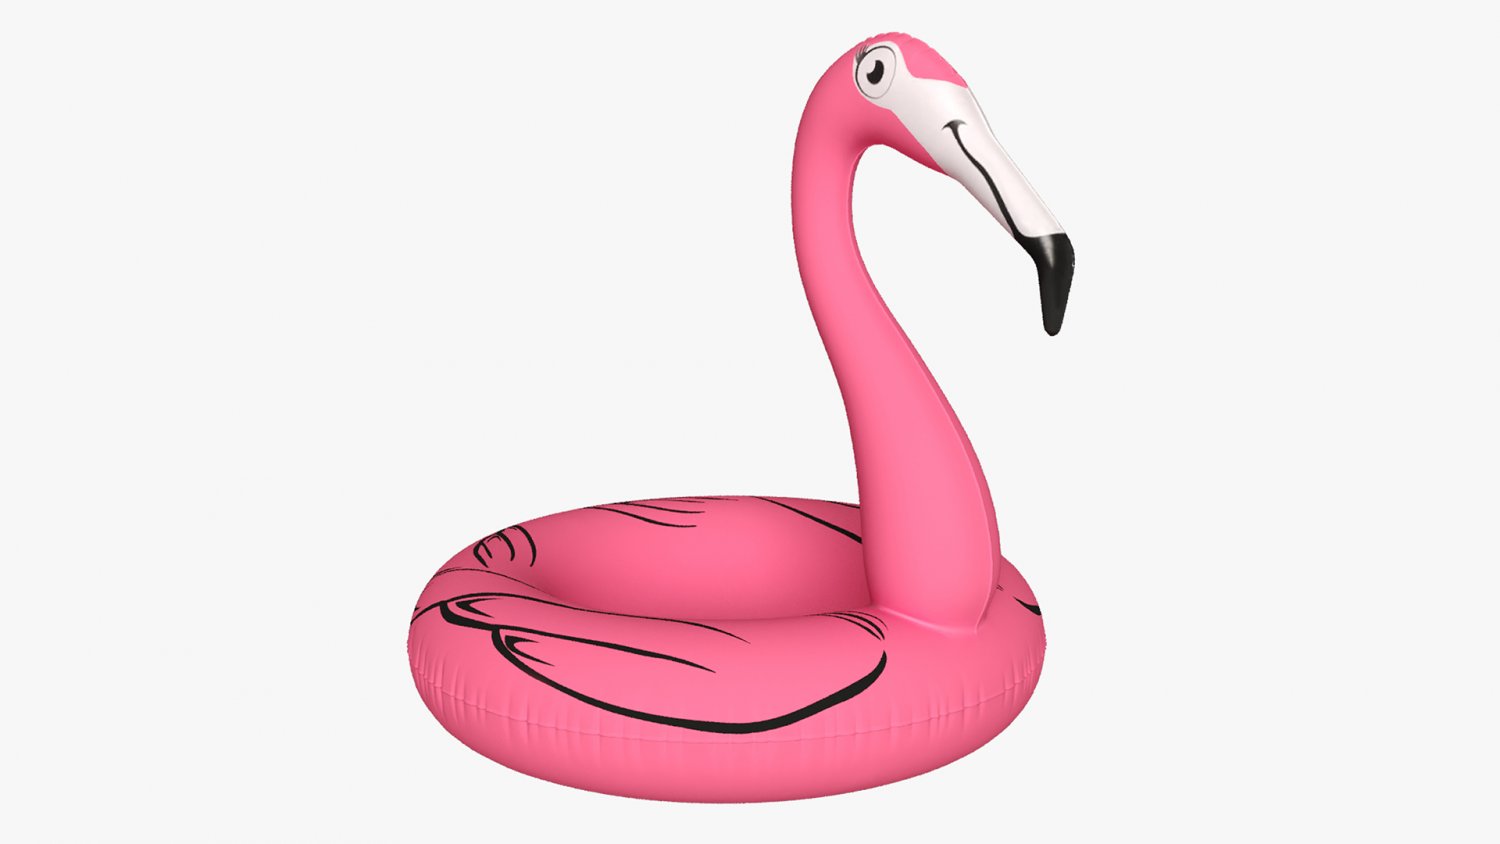 https://netrinoimages.s3.eu-west-2.amazonaws.com/2017/03/16/140444/420055/pink_flamingo_pool_float_3d_model_c4d_max_obj_fbx_ma_lwo_3ds_3dm_stl_4322802_o.jpg